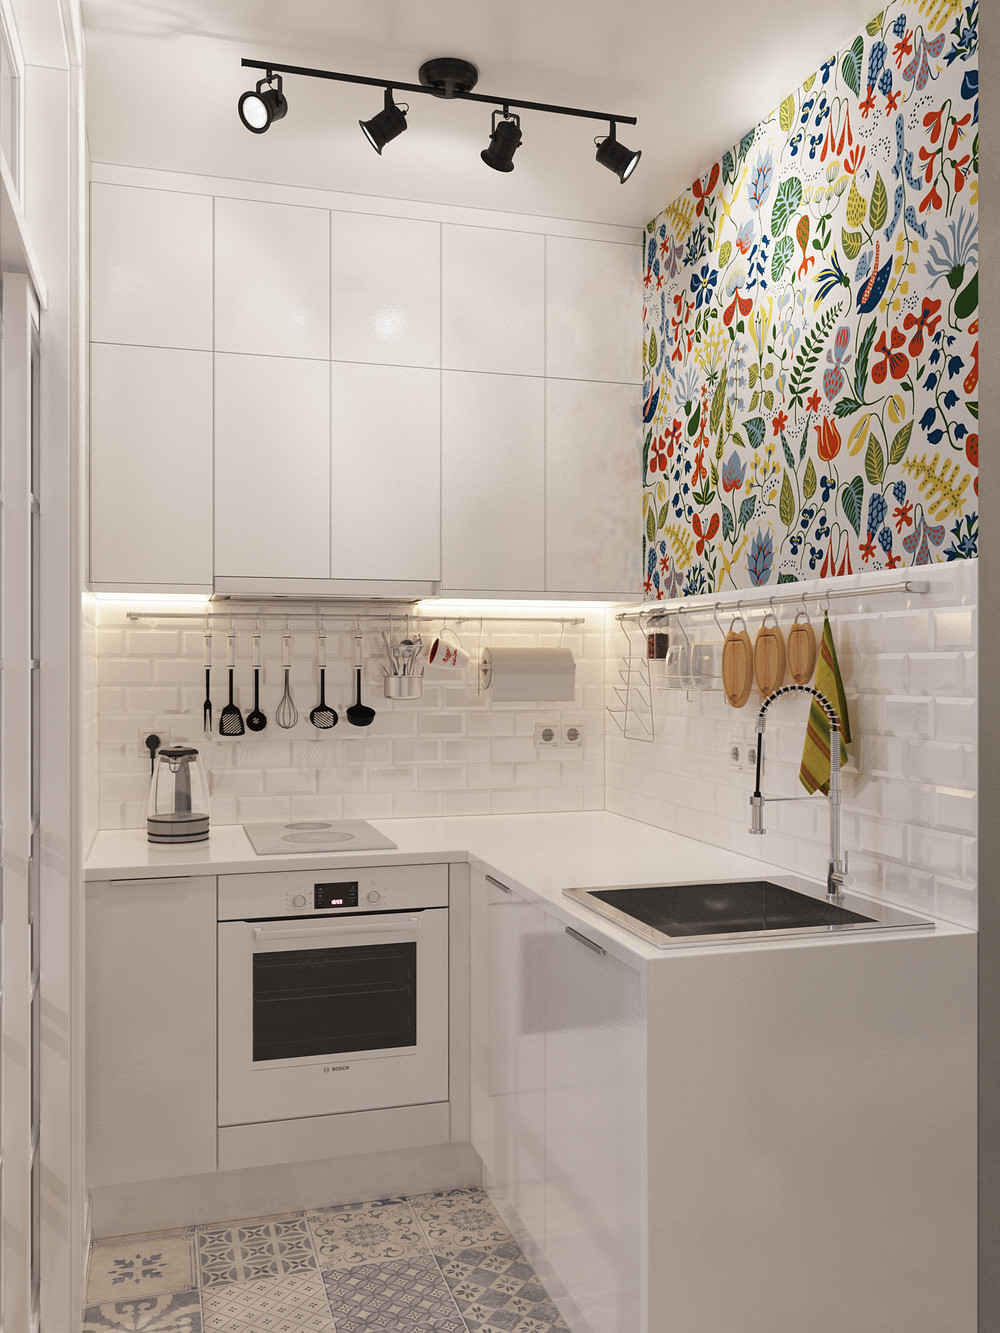 tiny kitchen design wall art | interior design ideas.